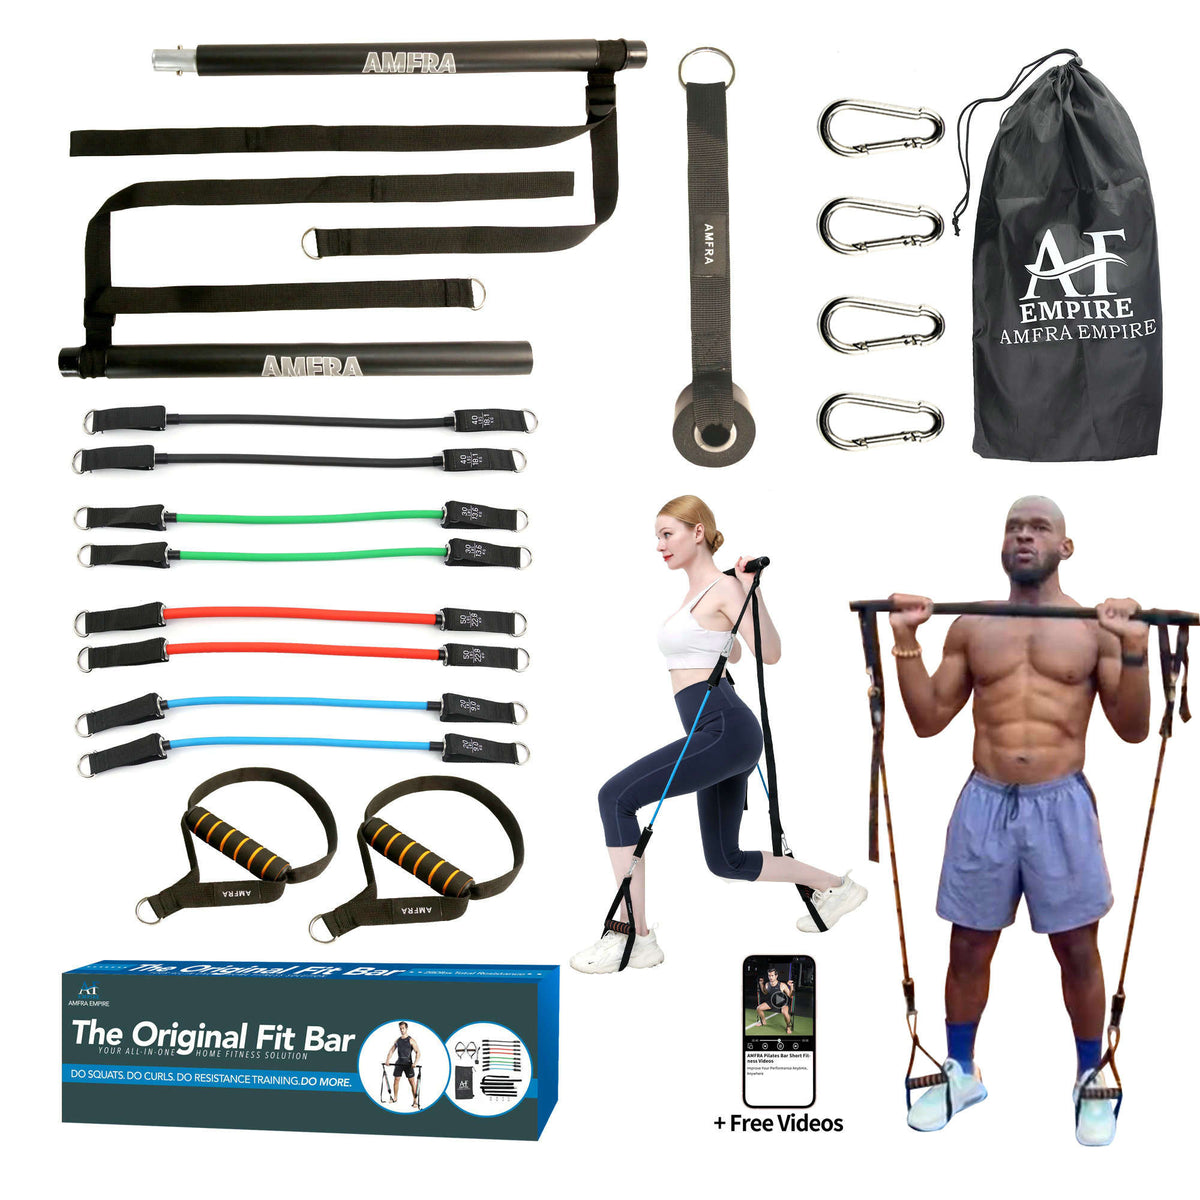 AMFRA Pilates Bar Kit with Resistance Bands for Men & Women – Amfra Empire